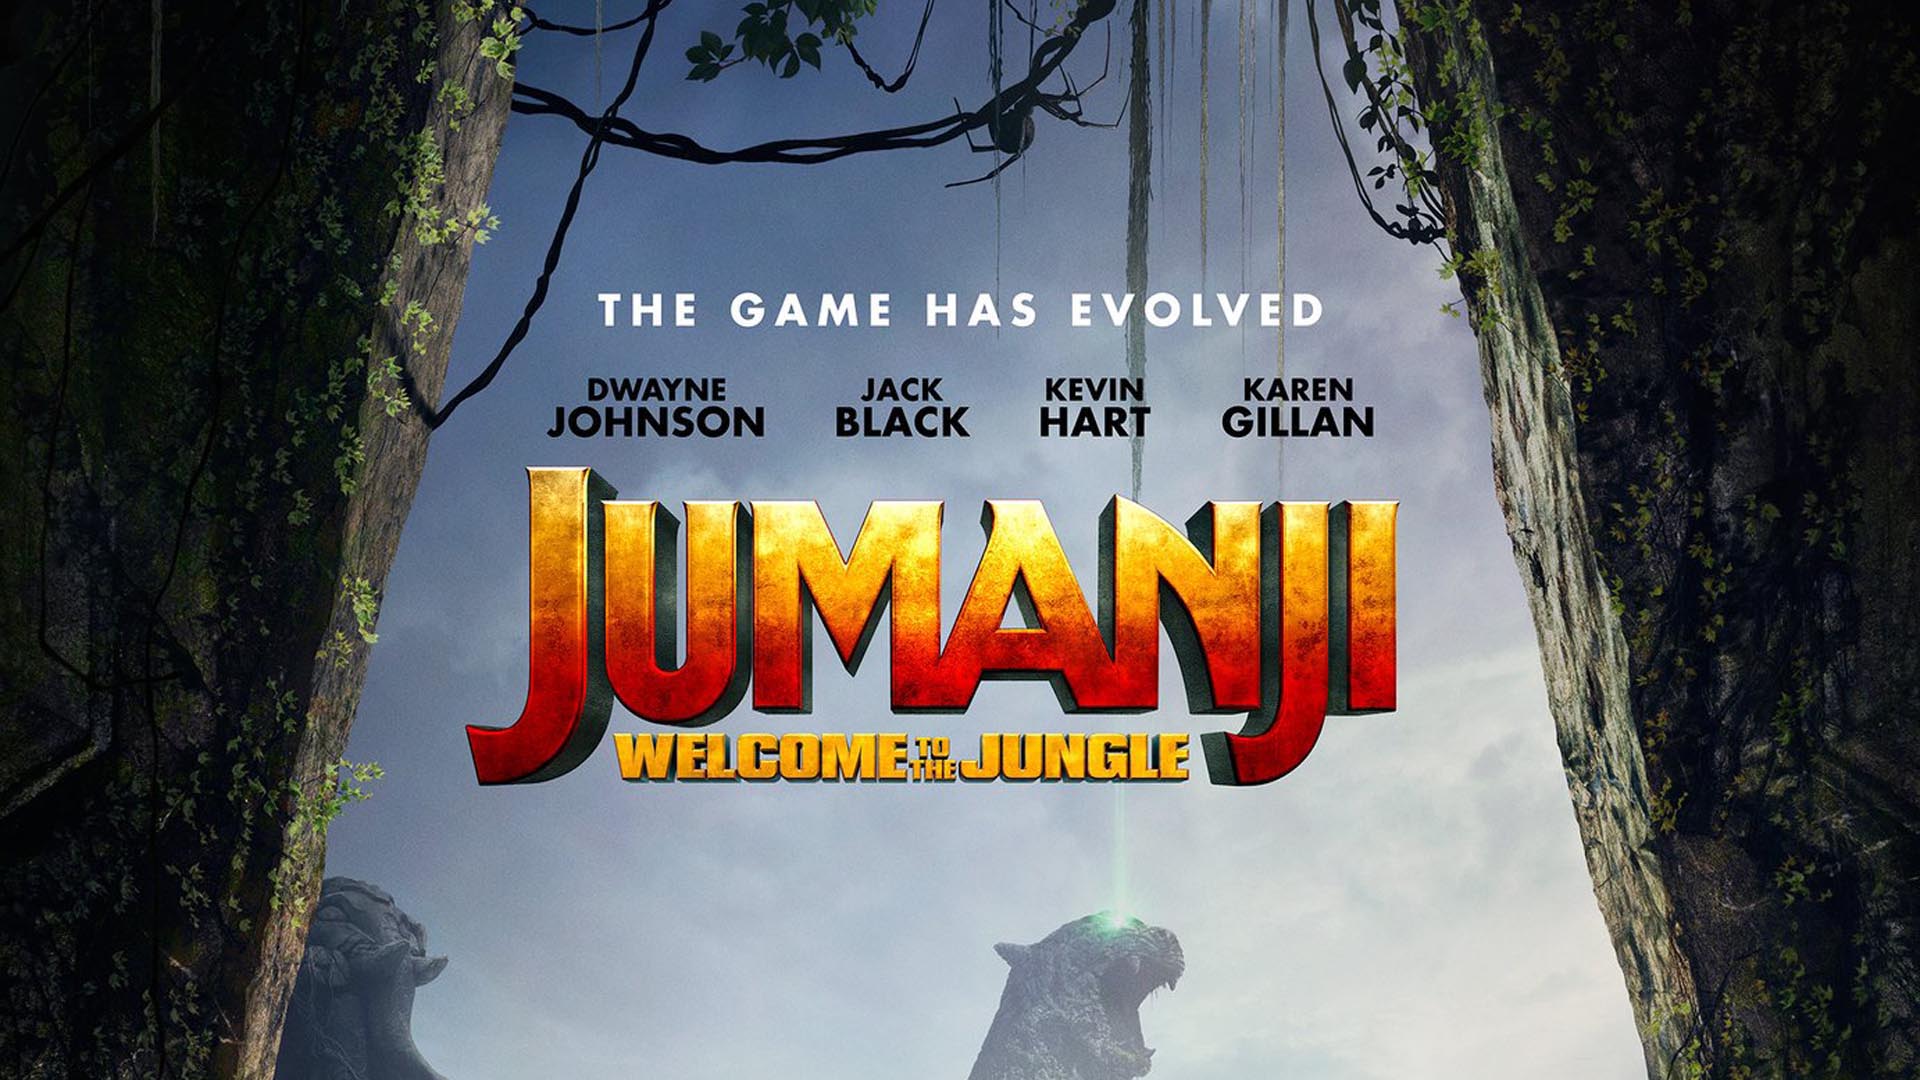 HD Jumanji Welcome to the Jungle Movie Wallpaper